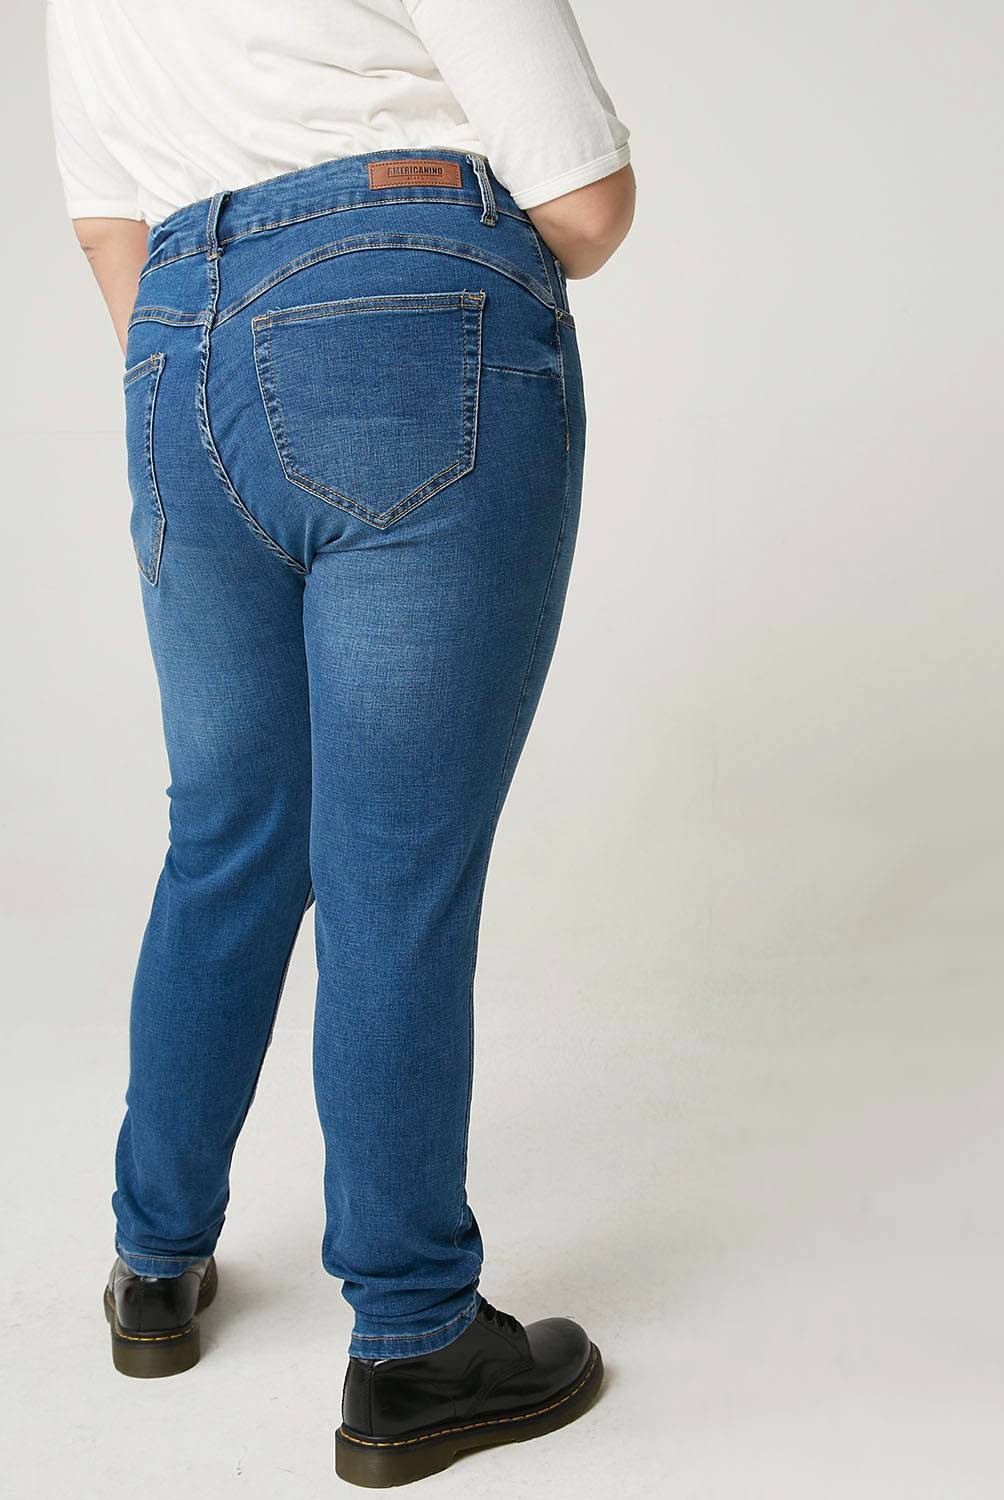 AMERICANINO - Americanino Jeans Skinny Tiro Súper Alto Mujer